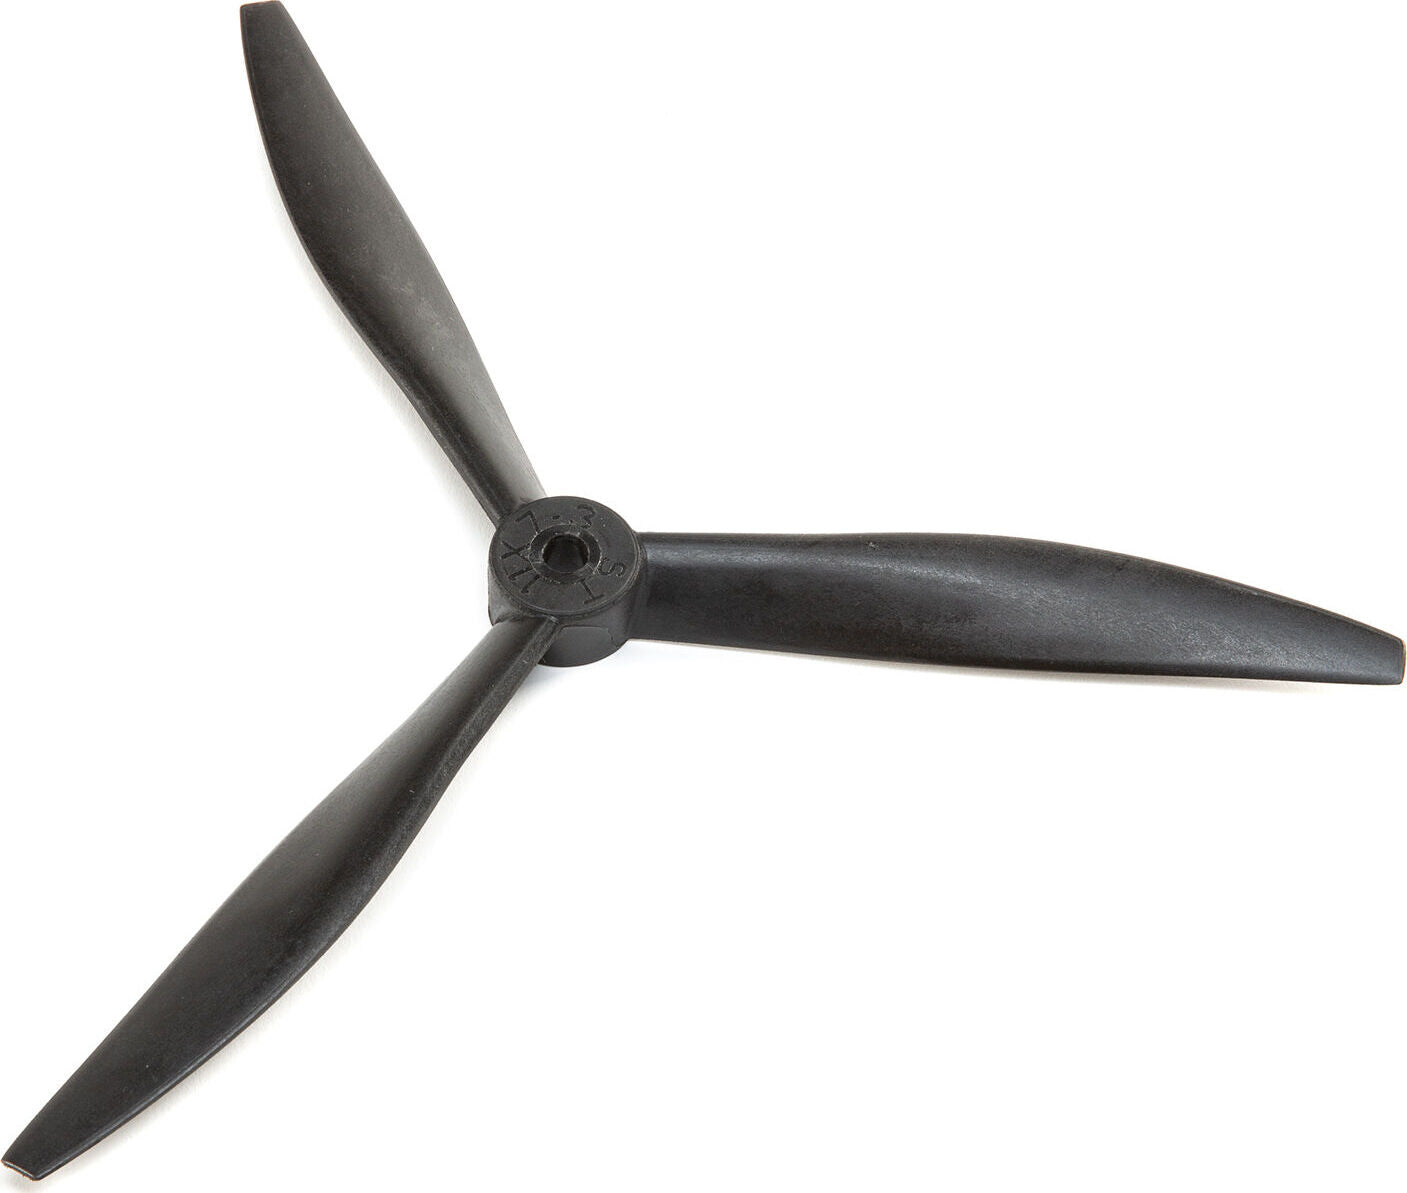 3-Blade Propeller, 11 x 7.5